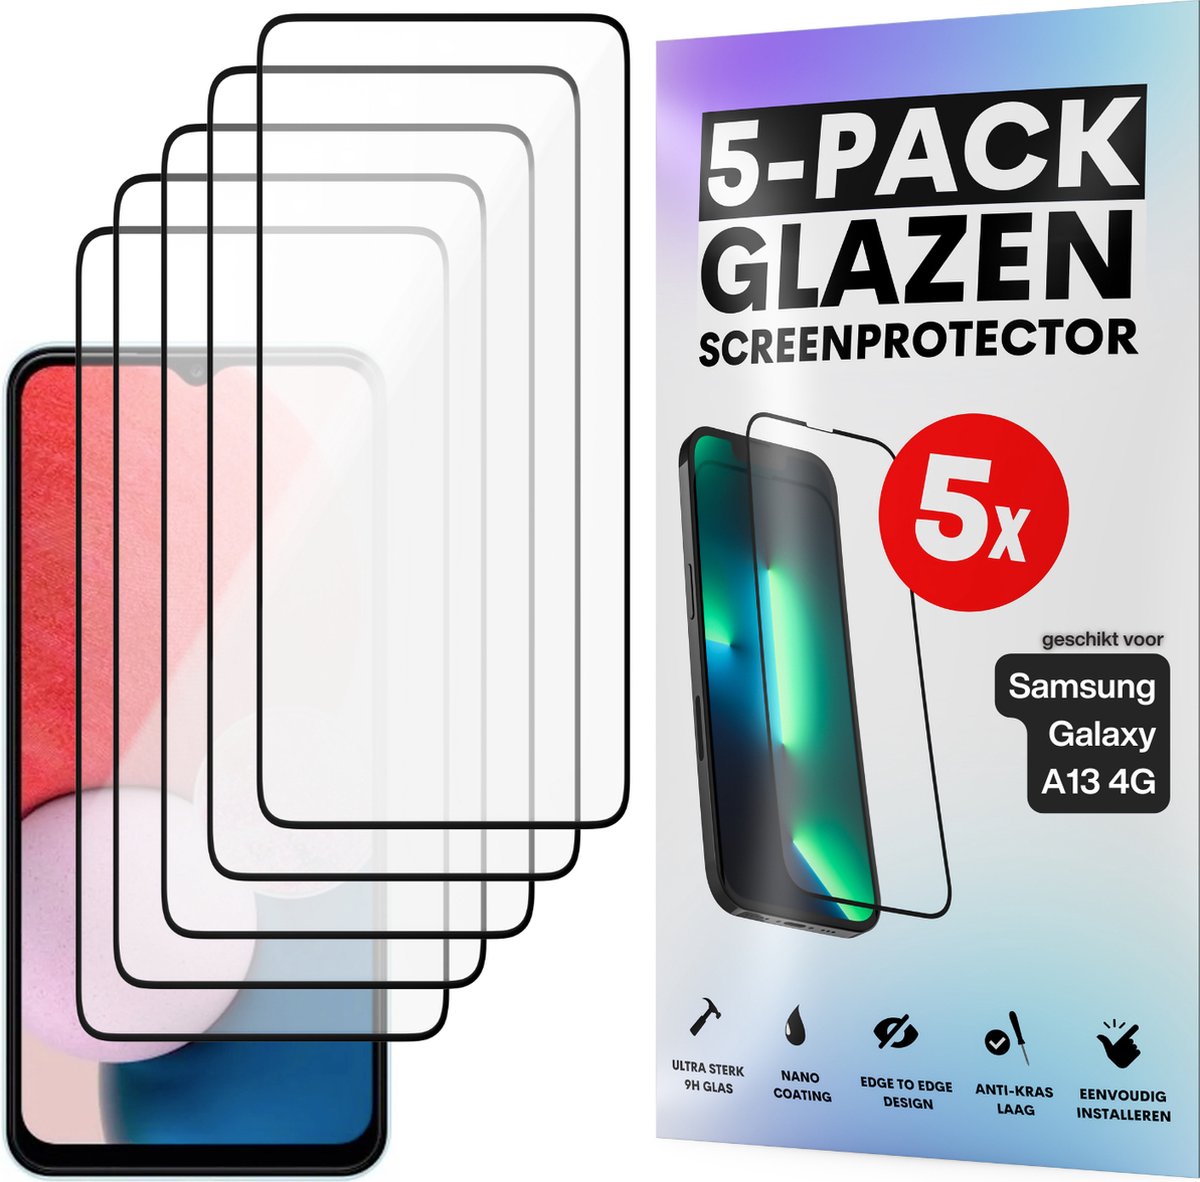 Screenprotector - Geschikt voor Samsung Galaxy A13 4G - Gehard Glas - Full Cover Tempered Glass - Case Friendly - 5 Pack